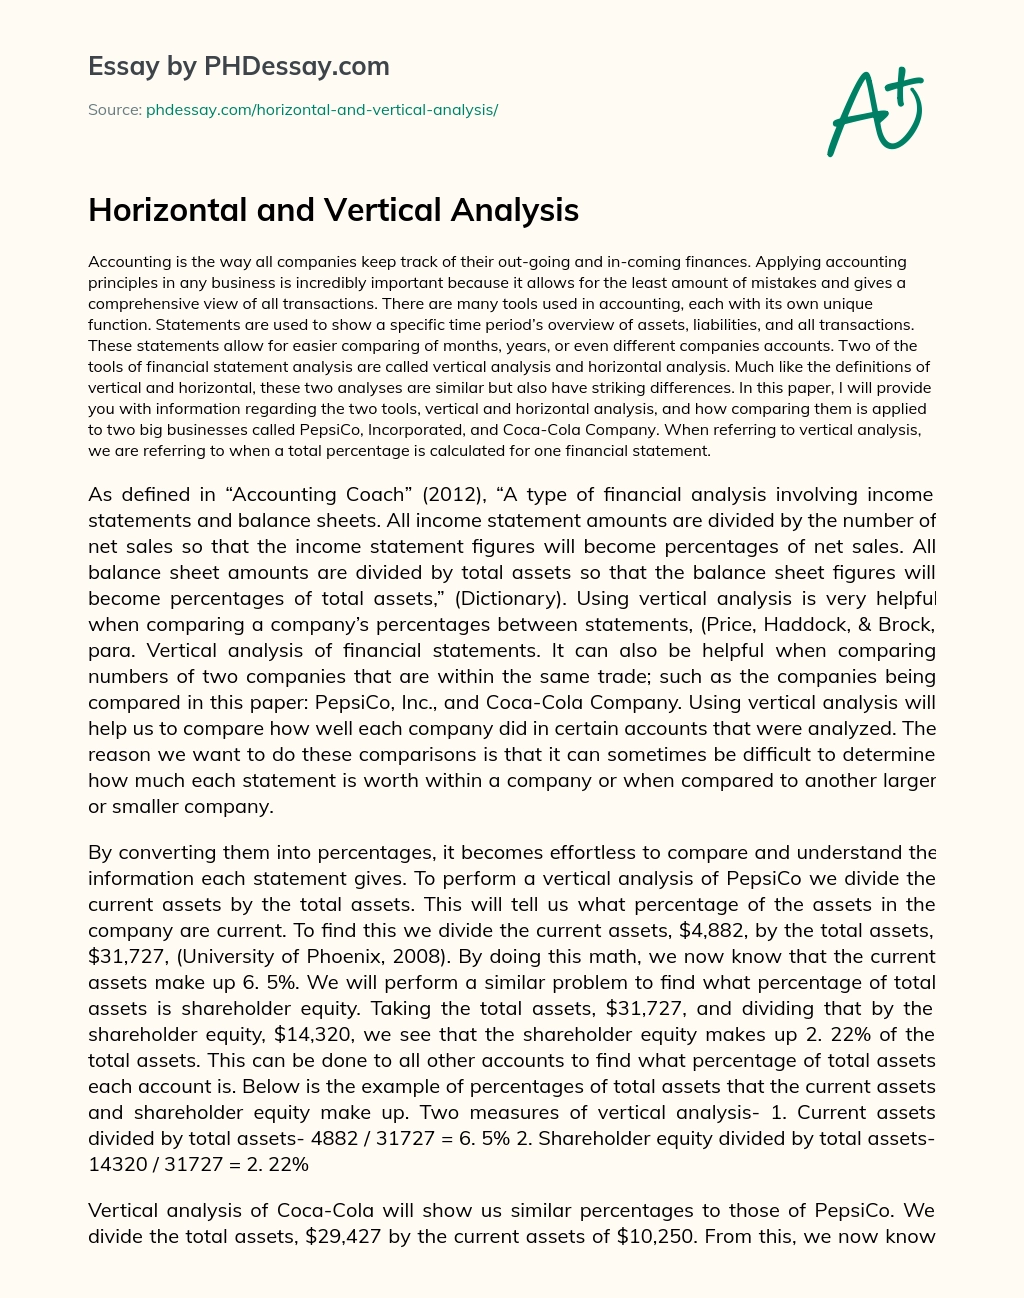 Horizontal and Vertical Analysis essay